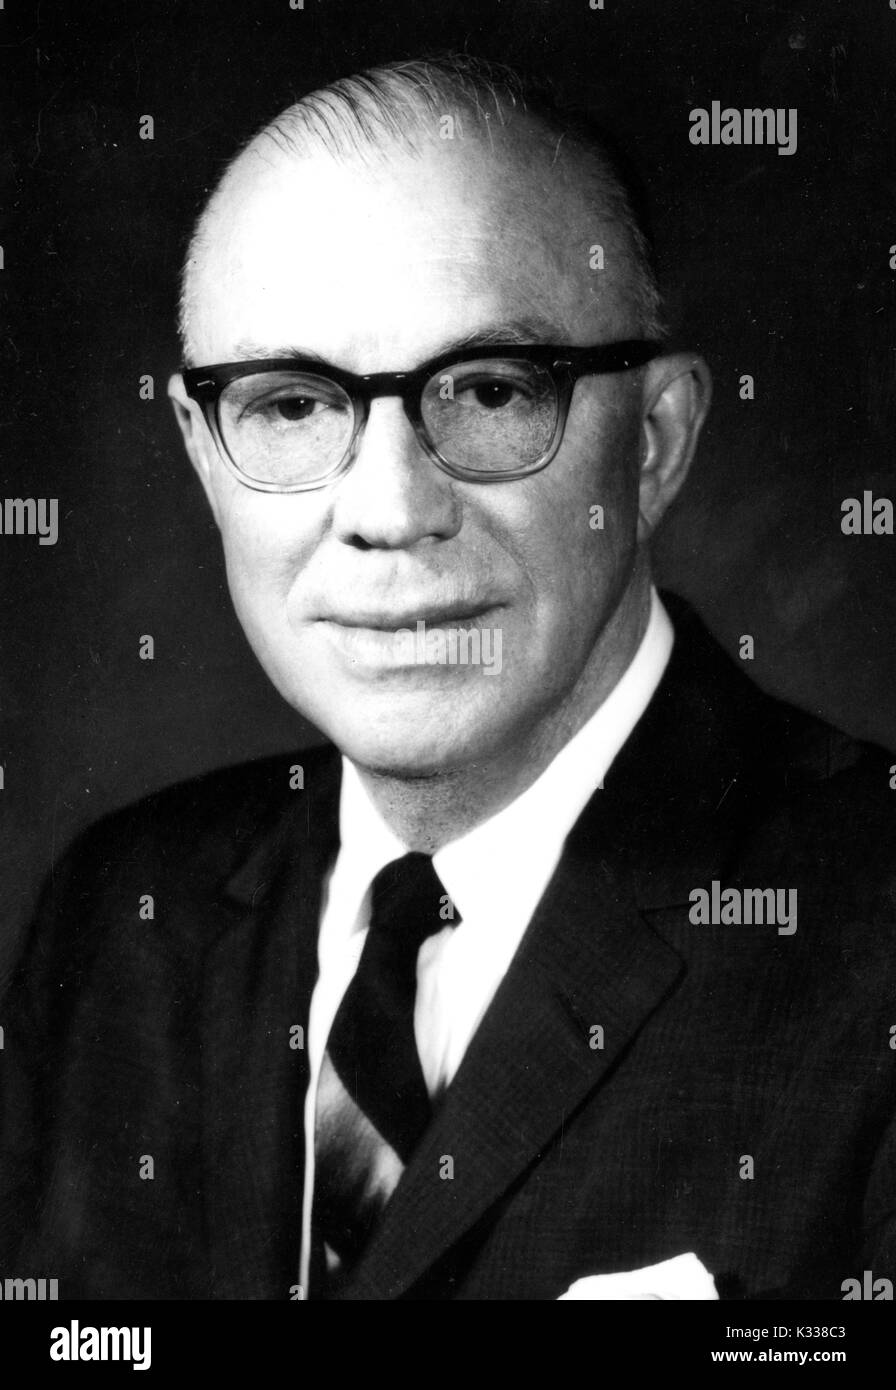 Retrato de American Educational administrador y Presidente de la Universidad Johns Hopkins Milton S. Eisenhower, 1960. Foto de stock